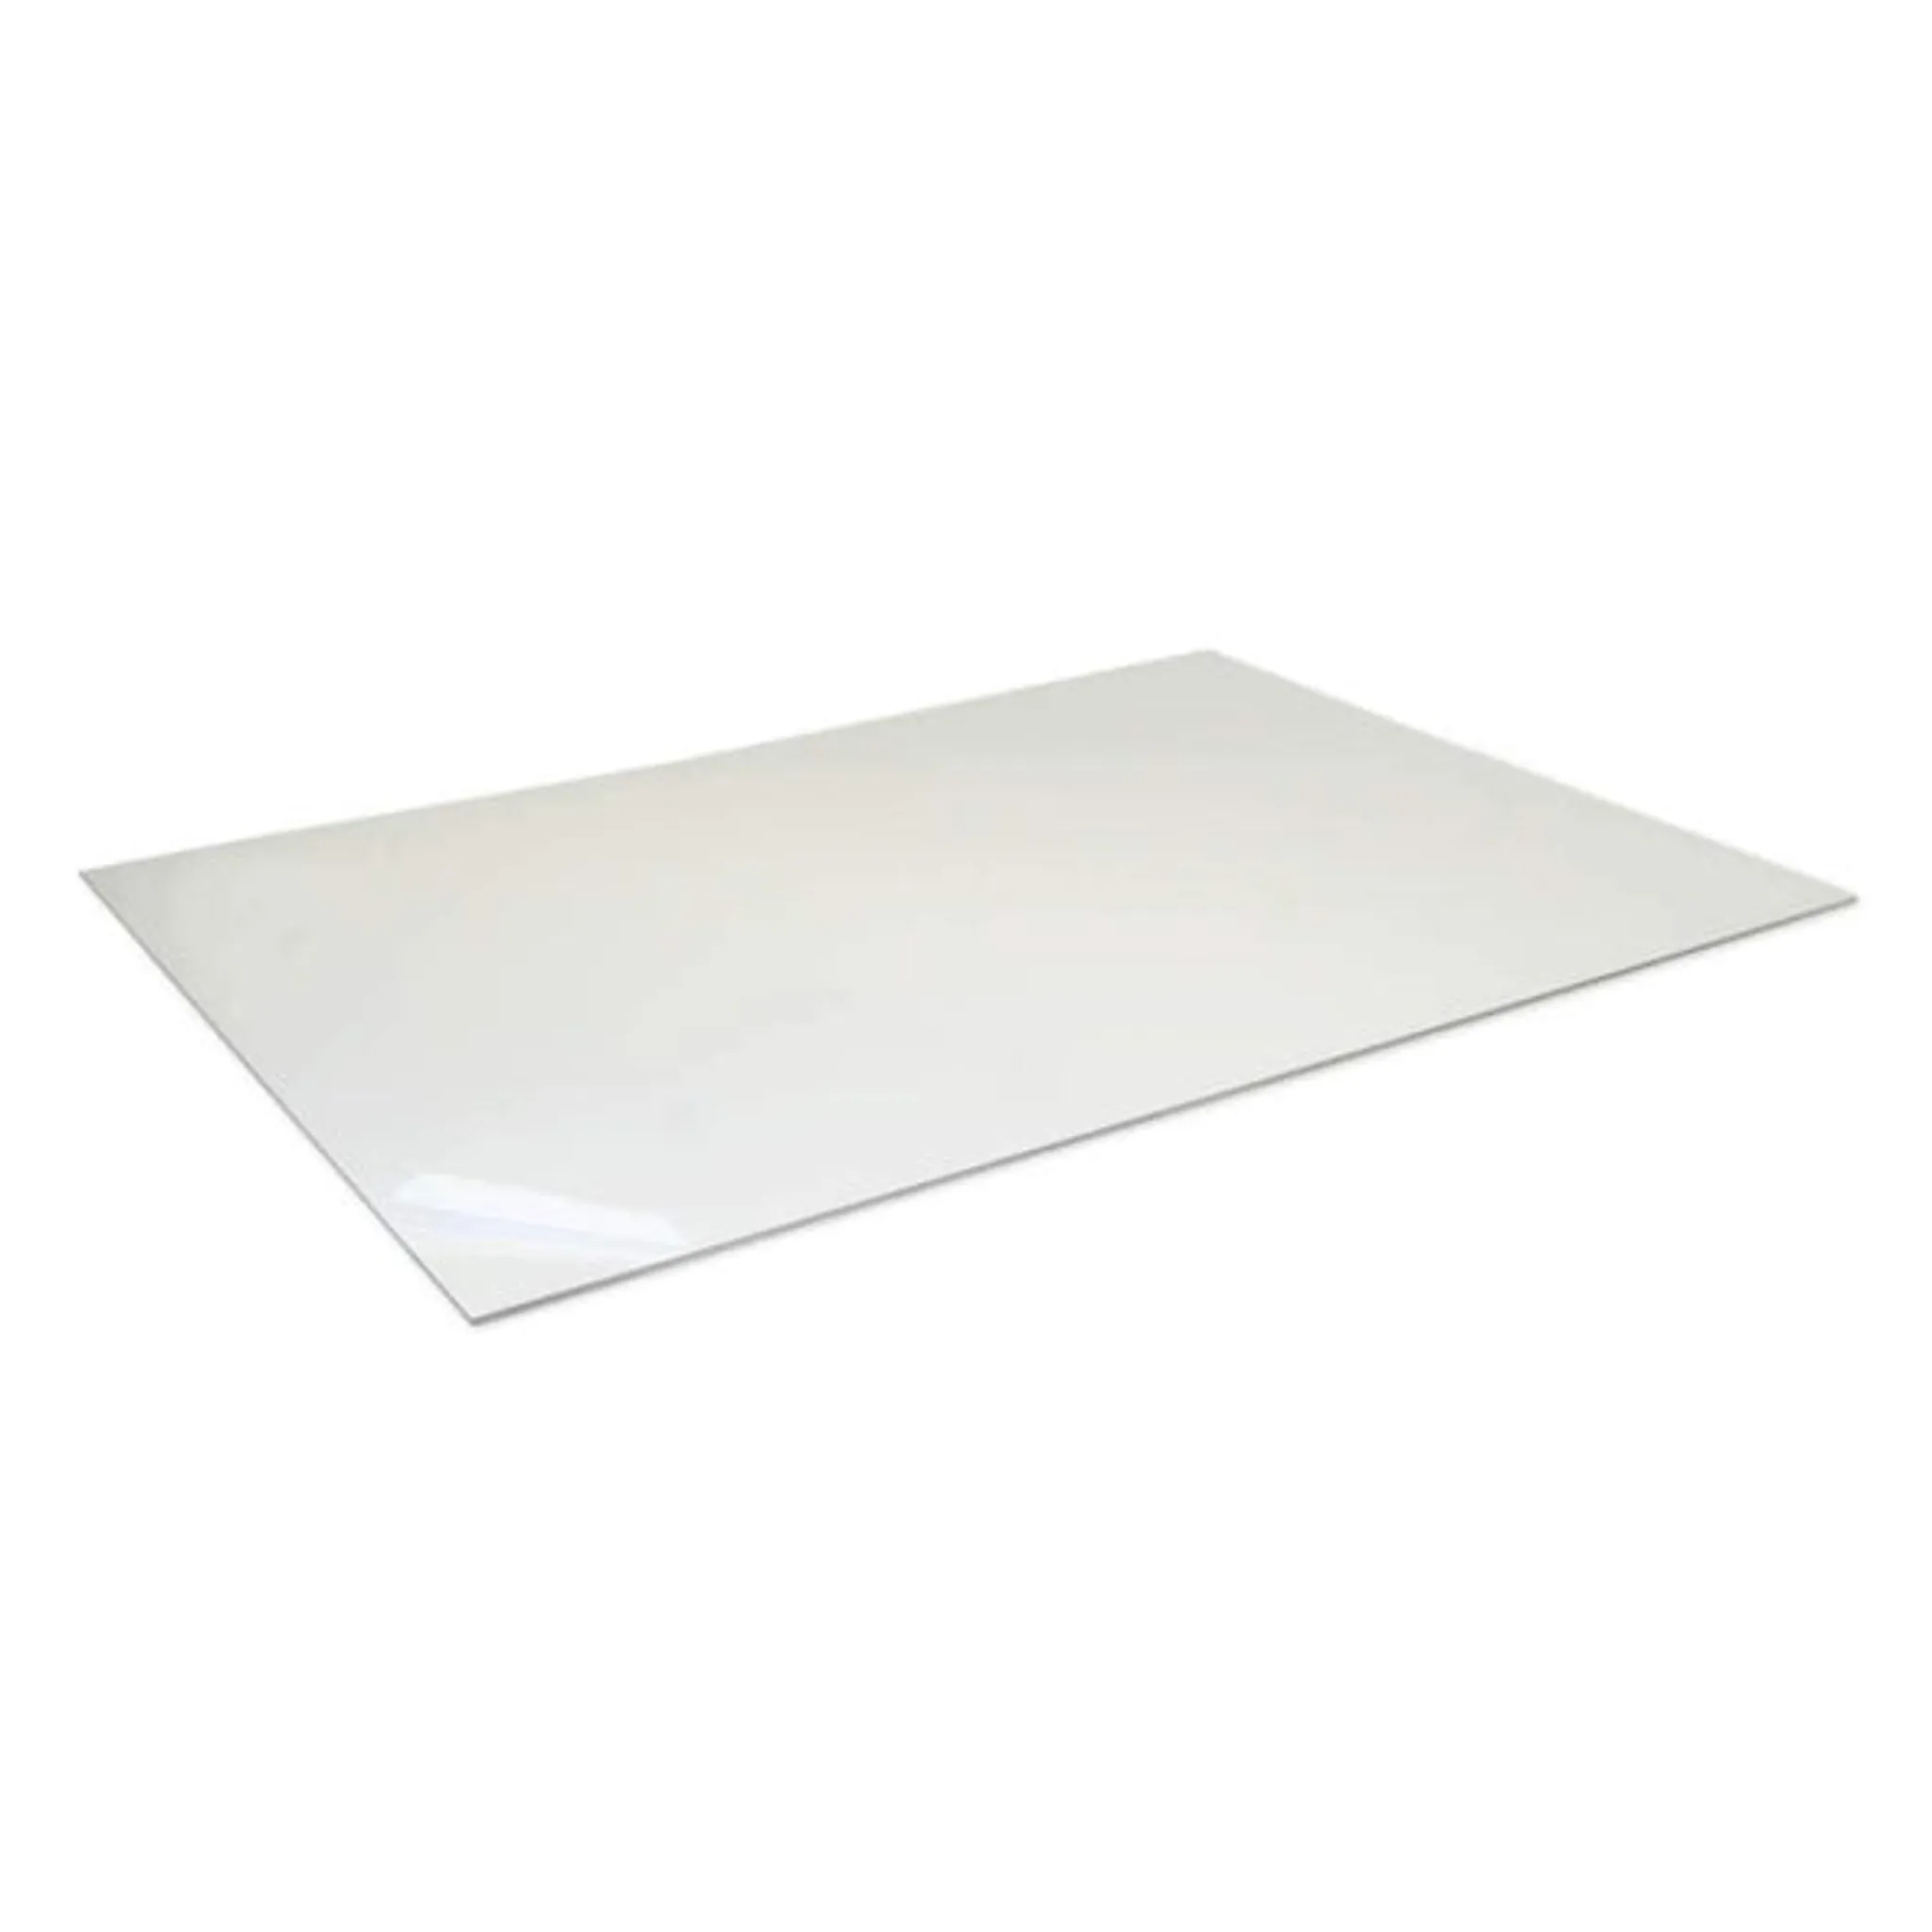 Polystyrol Platten - transparent & multifunktional - Bastelplatten